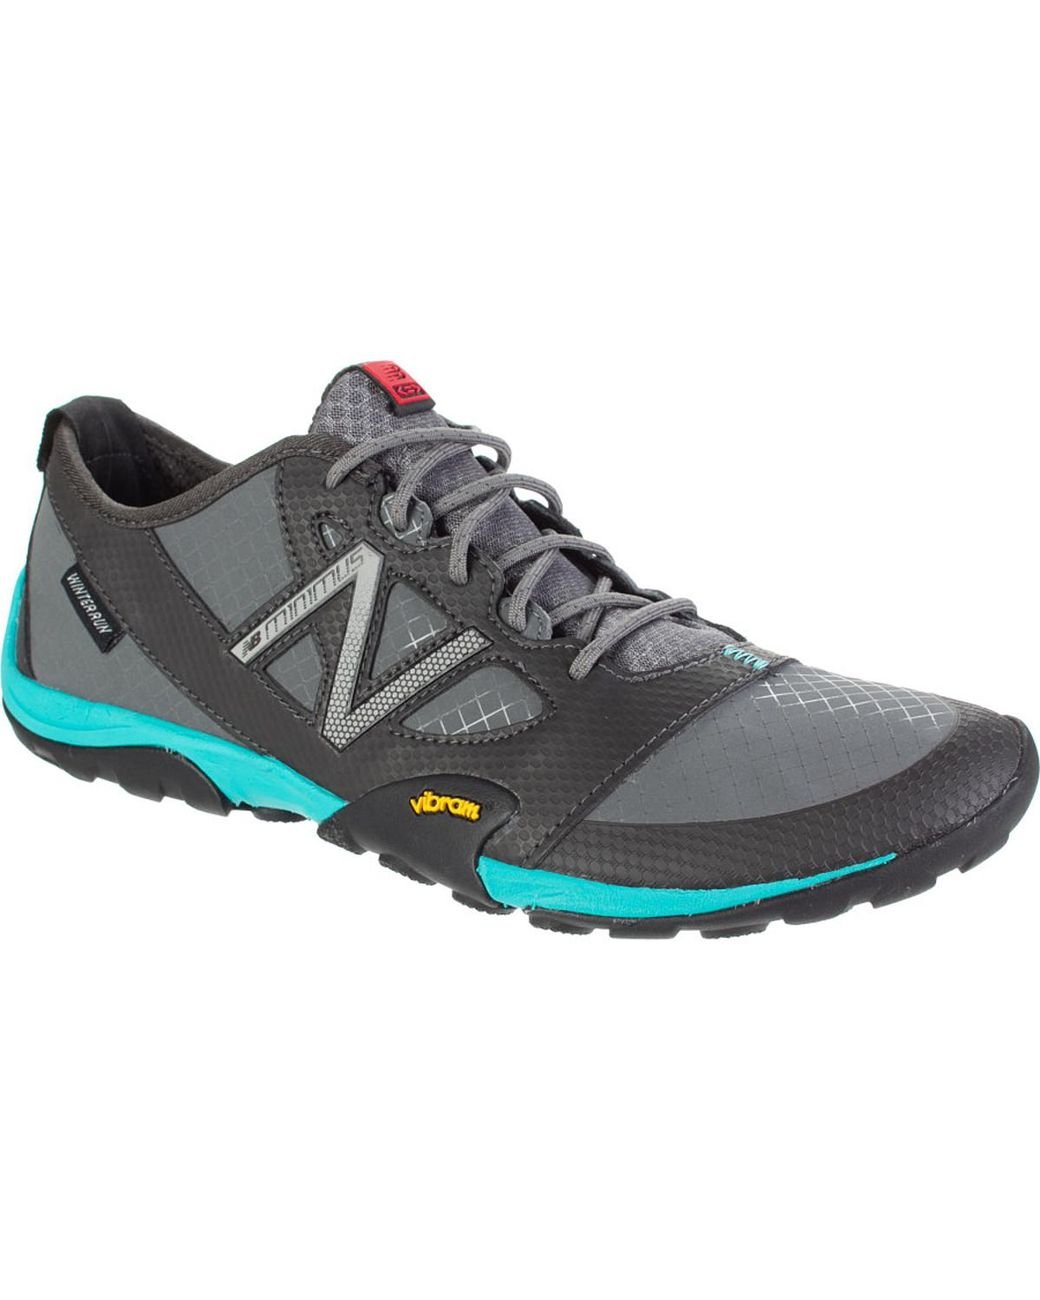 New Balance Wt20 Minimus Winter Trail Running Shoe in Gray | Lyst